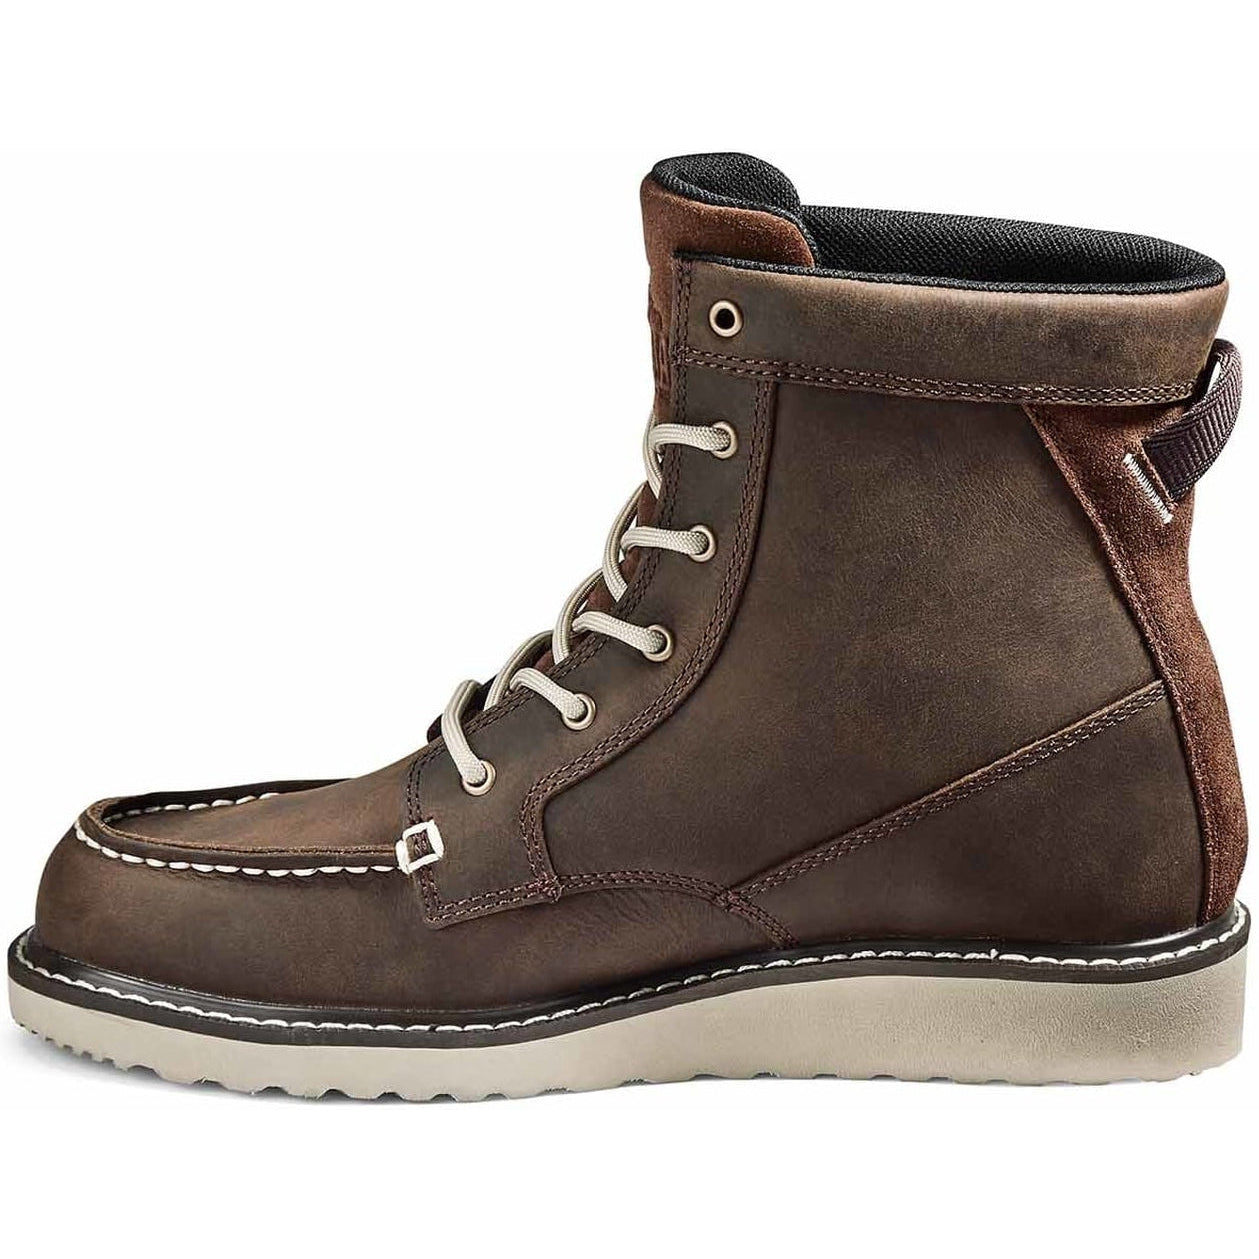 Kodiak Women's Whitton 6" Soft Toe Safety Work Boot -Brown- 4THKDB  - Overlook Boots